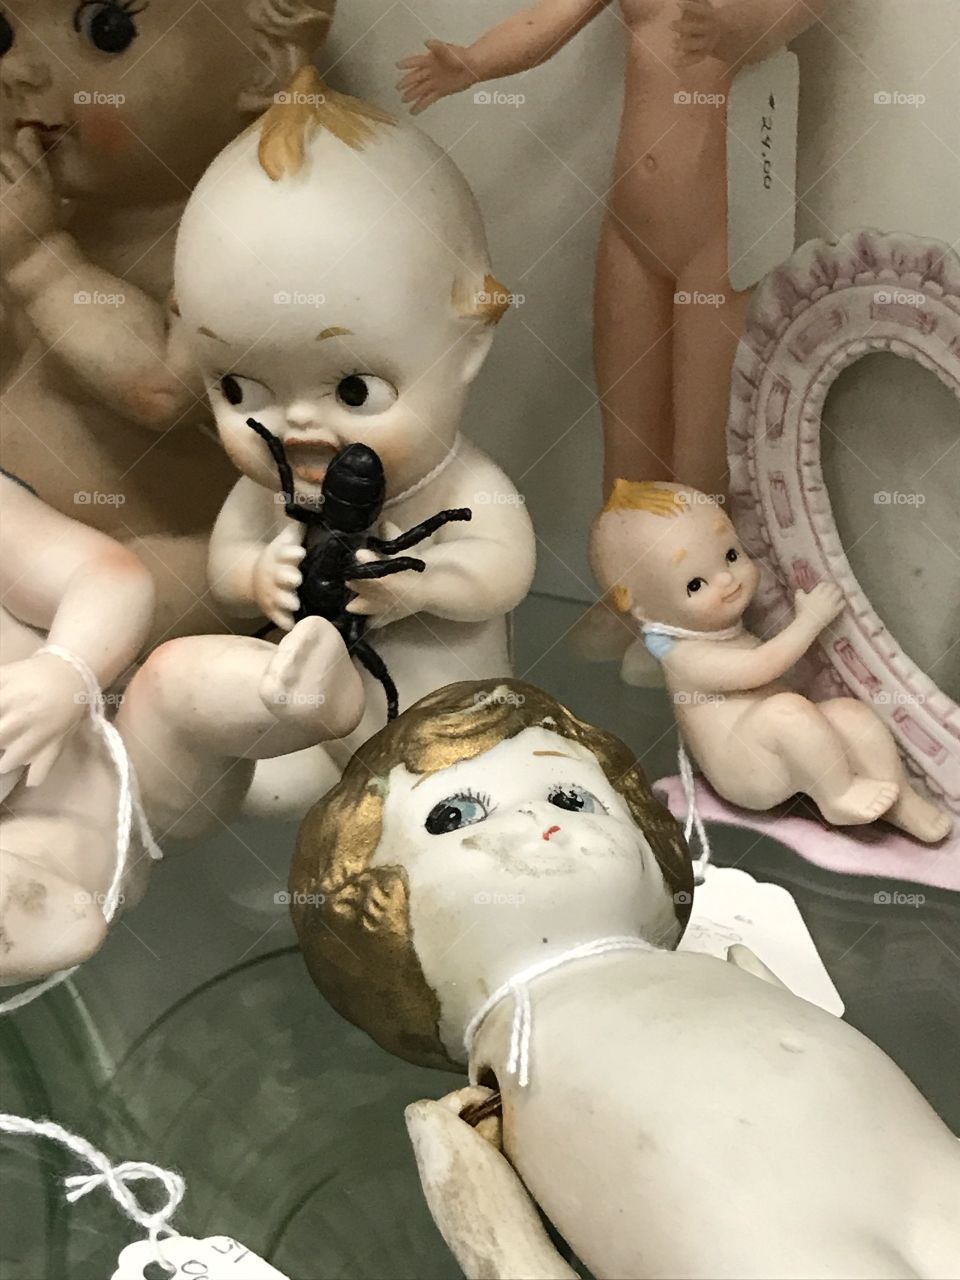 Creepy Dolls